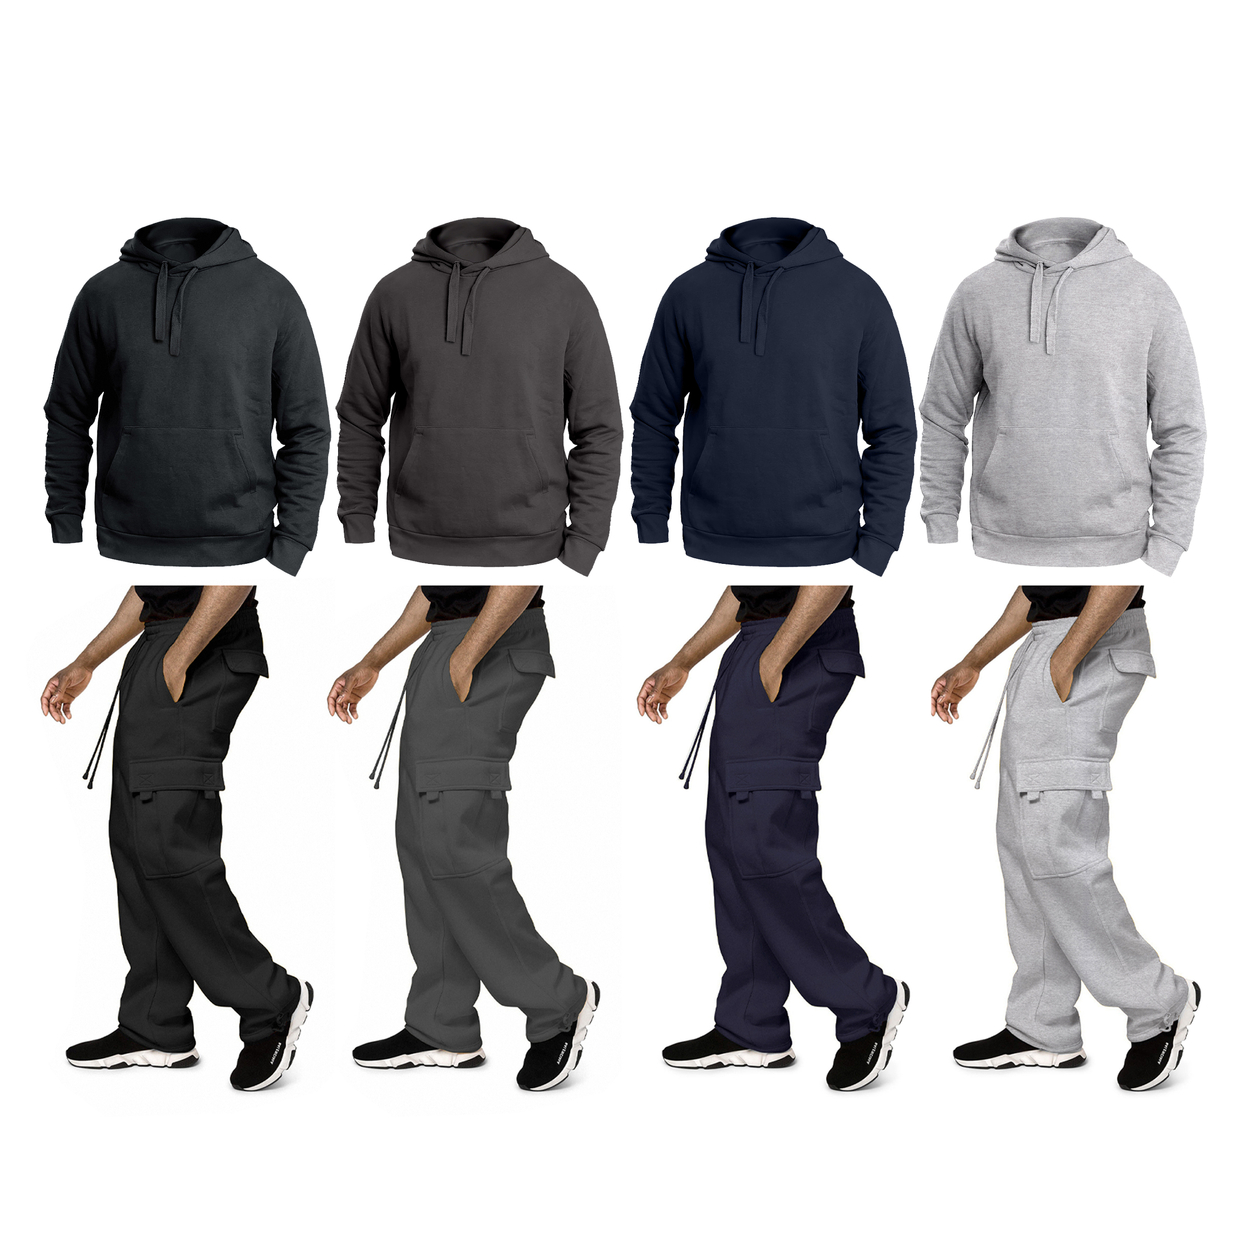 Men's Big & Tall Winter Warm Cozy Athletic Fleece Lined Multi-Pocket Cargo Sweatsuit - Black, X-large